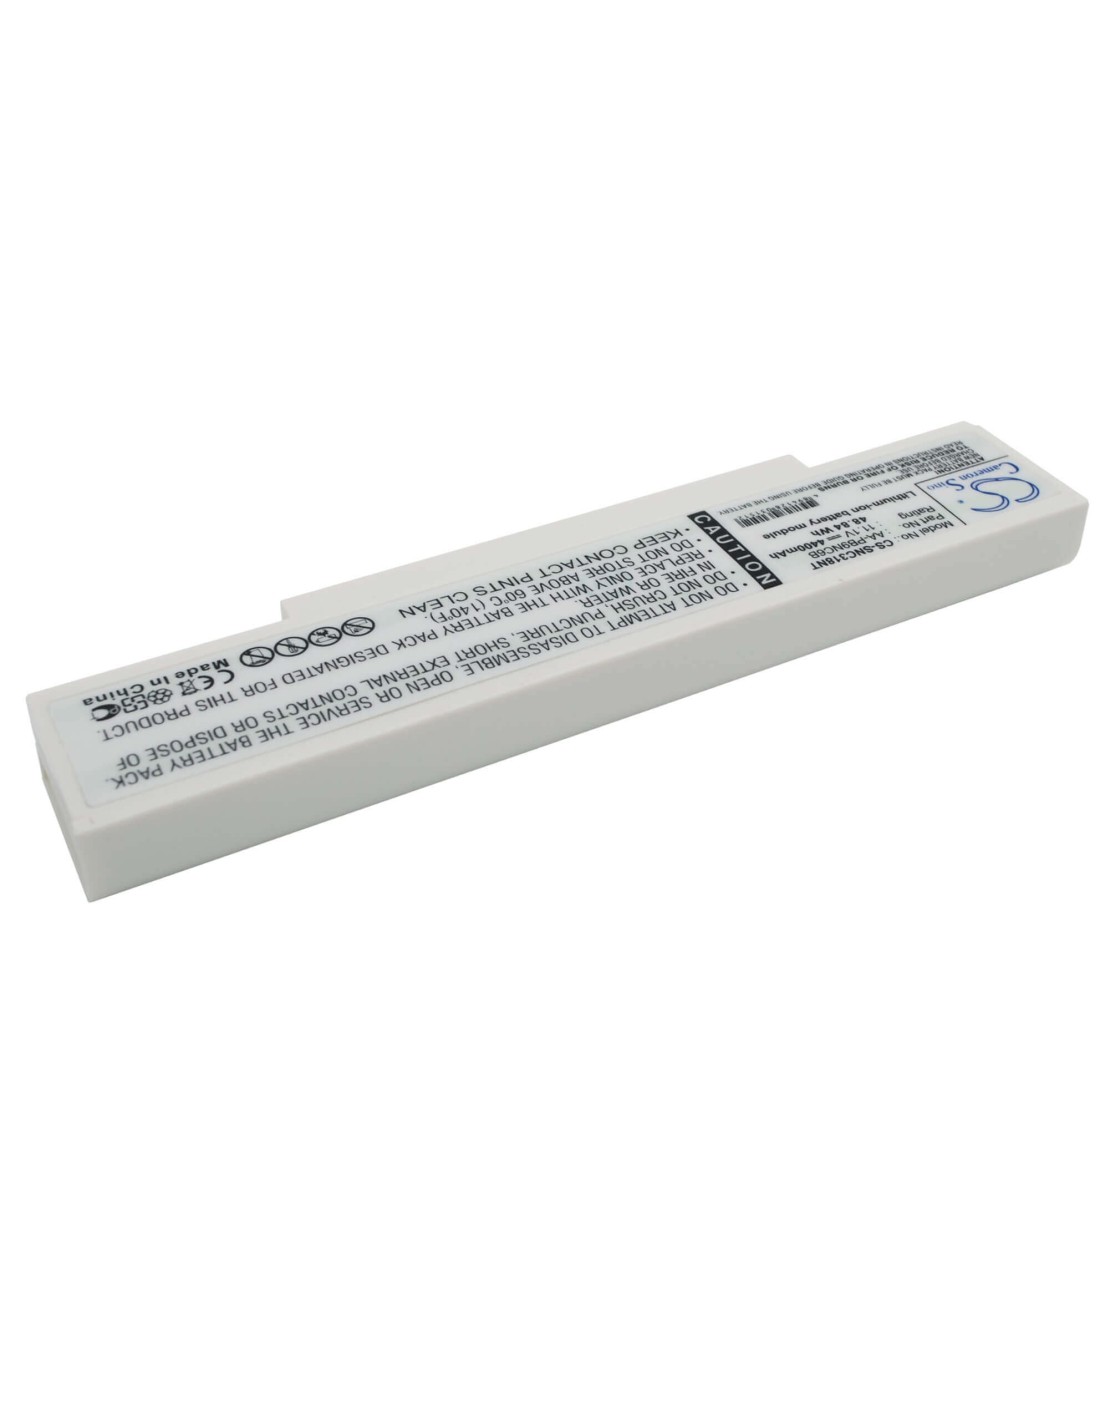 White Battery for Samsung Q318, Q318-dsoe, Q318-ds0h 11.1V, 4400mAh - 48.84Wh